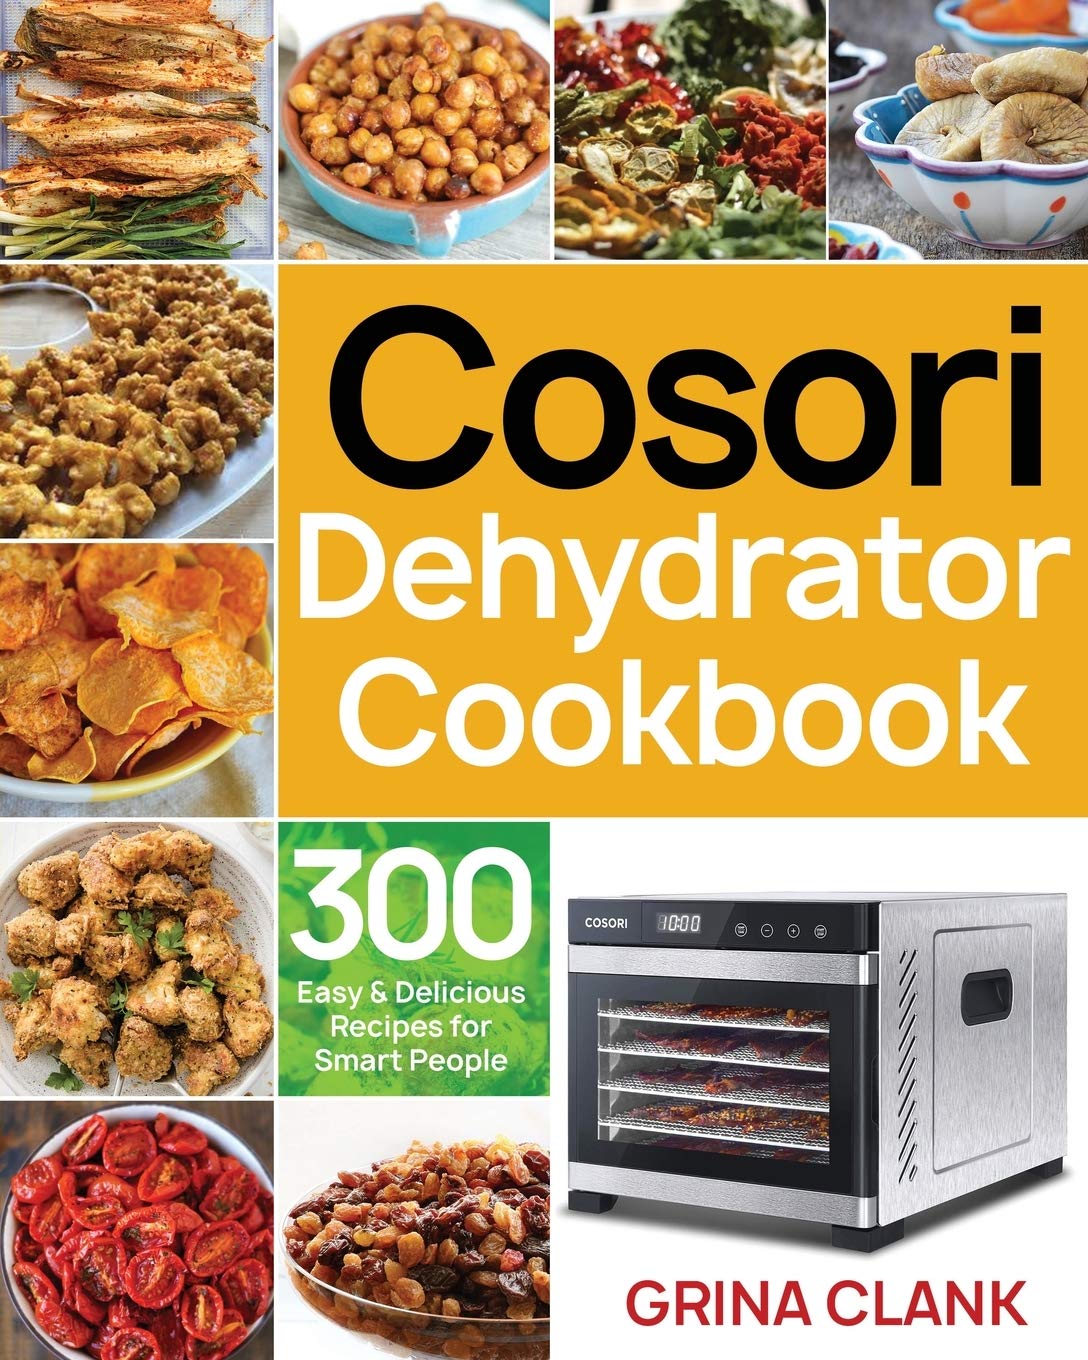 Cosori Dehydrator Cookbook